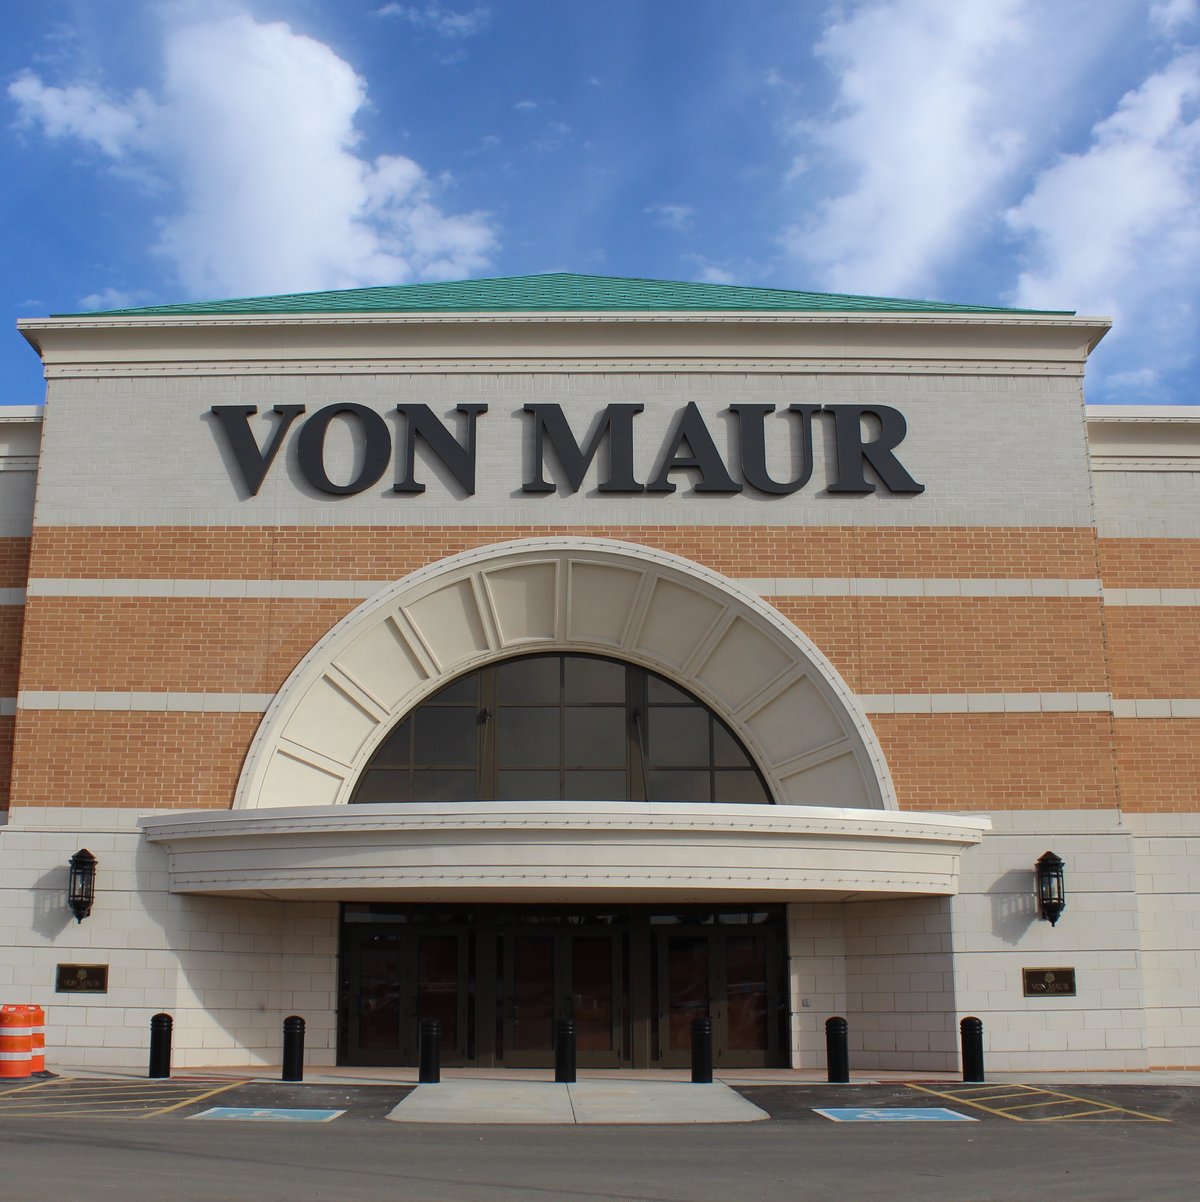 Von Maur reopening its store in Brookfield during the coronavirus